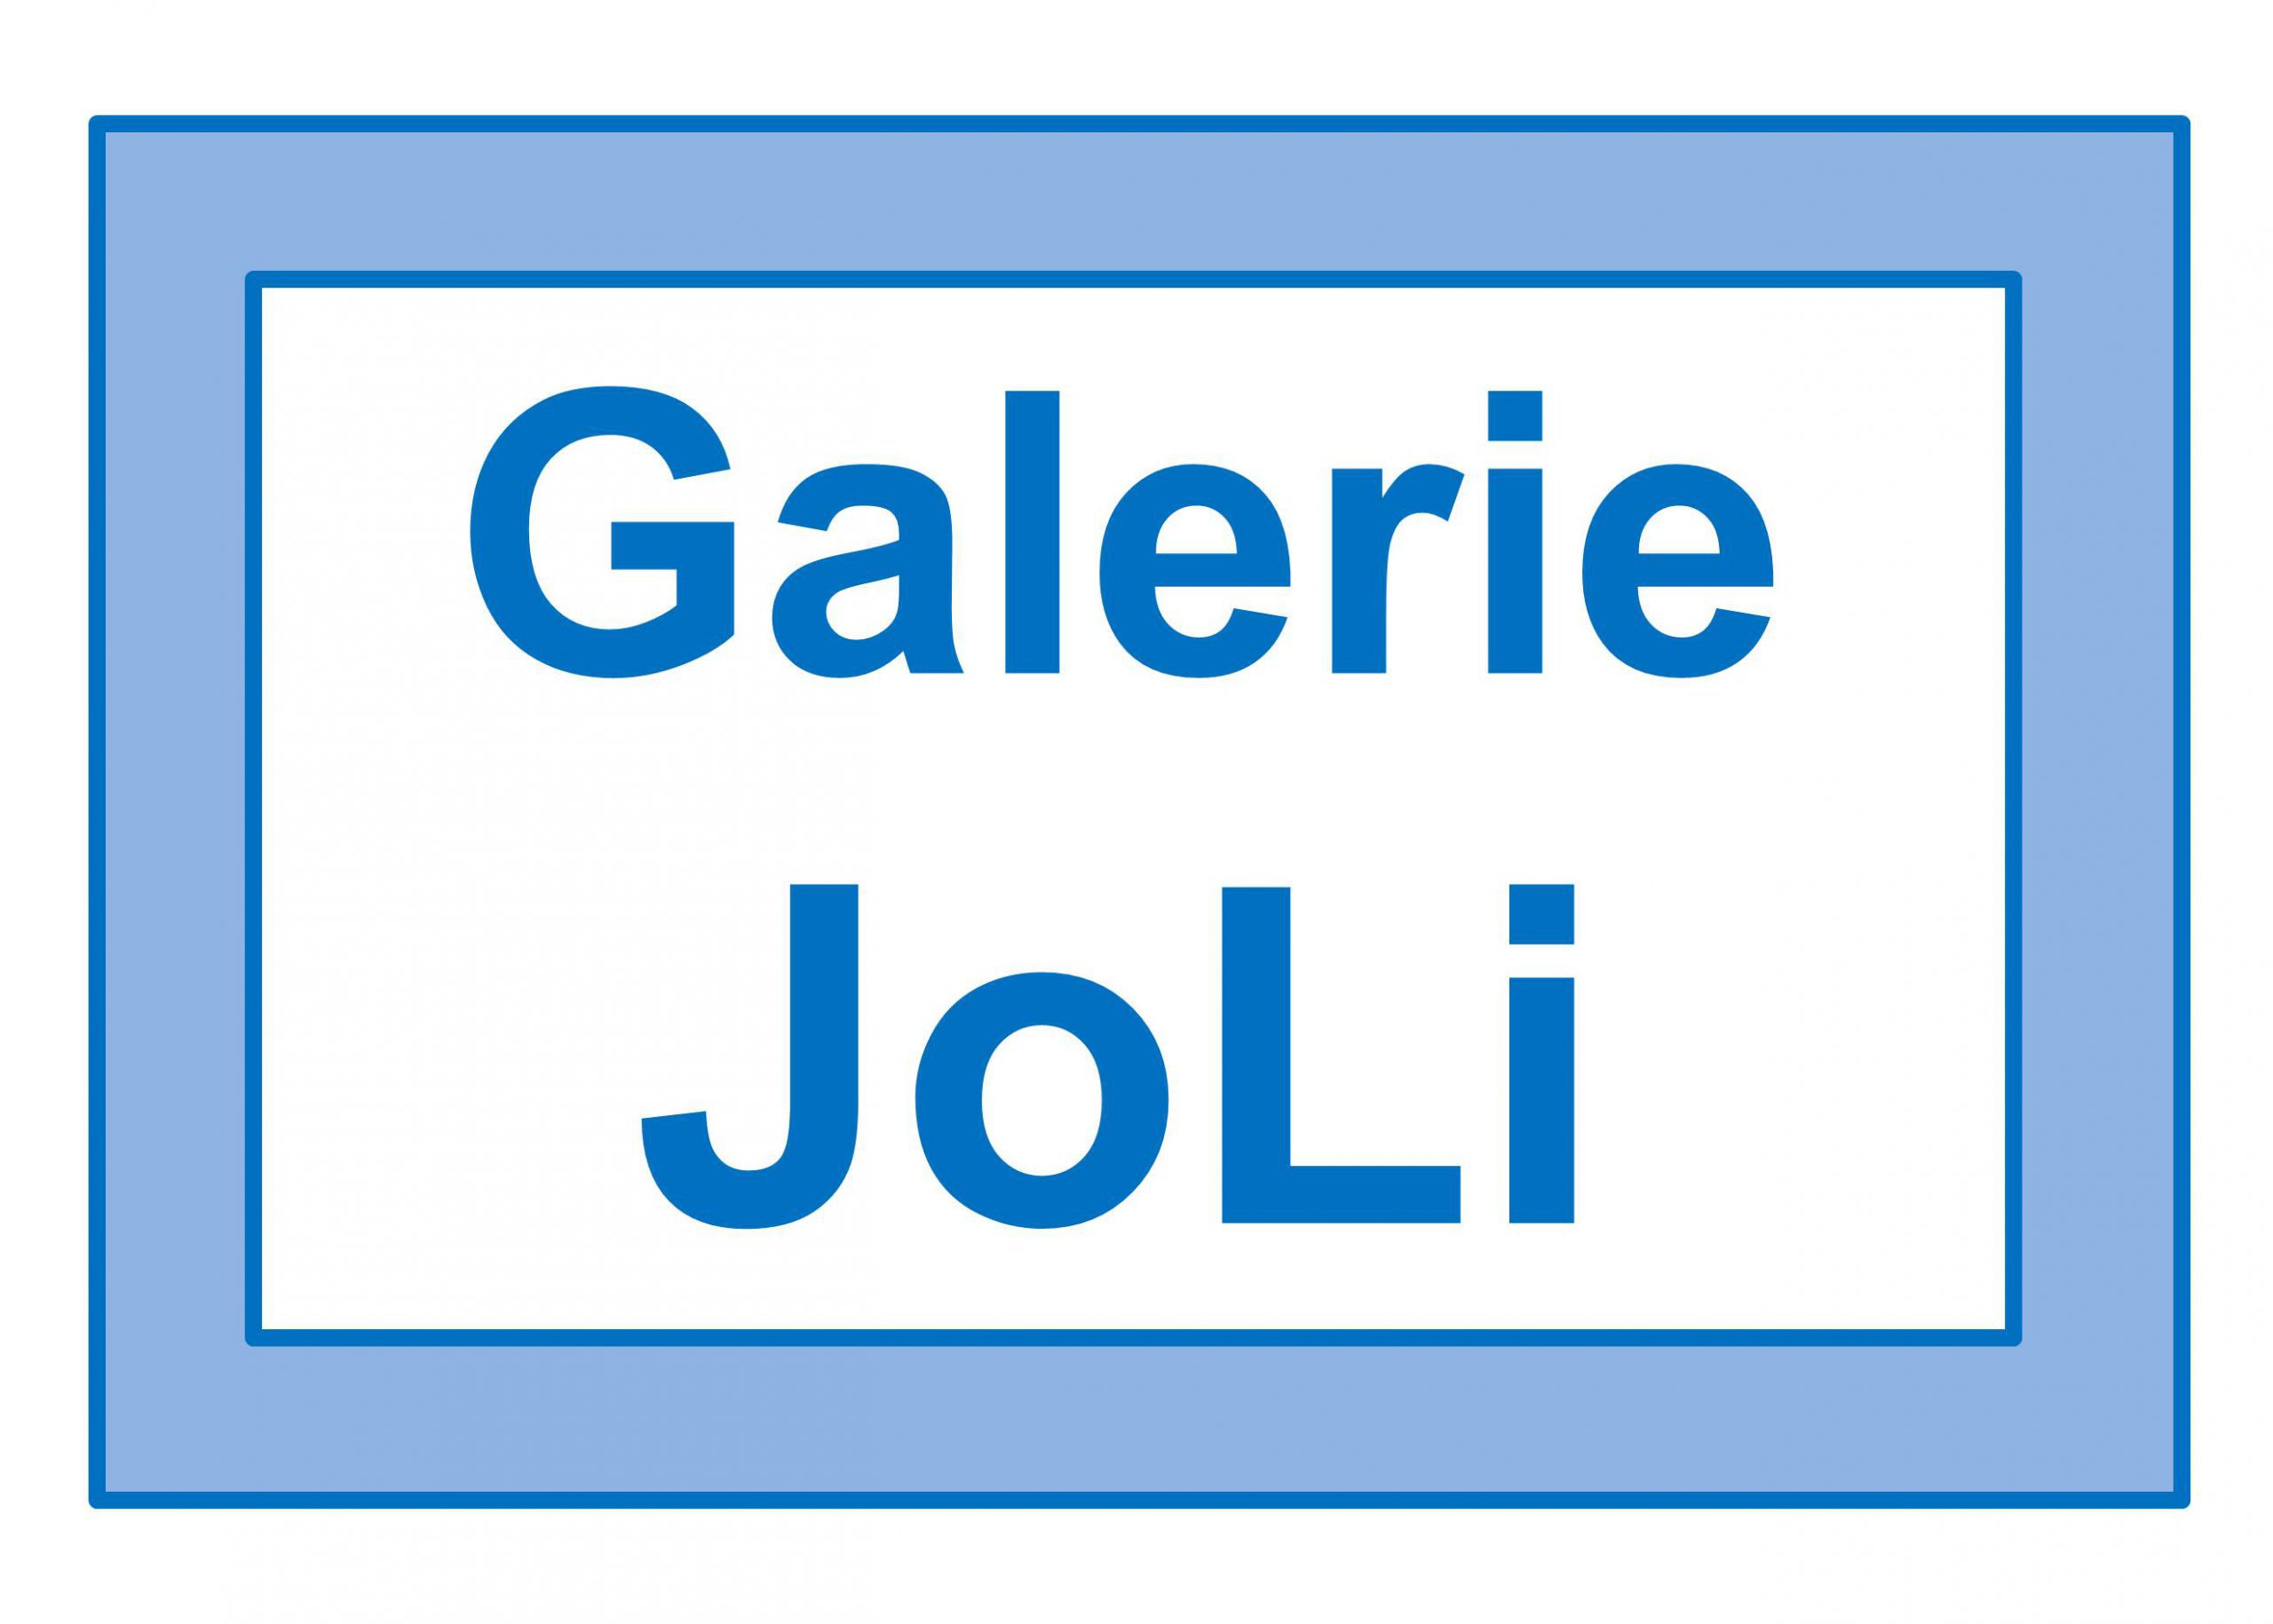 Galerie JoLi